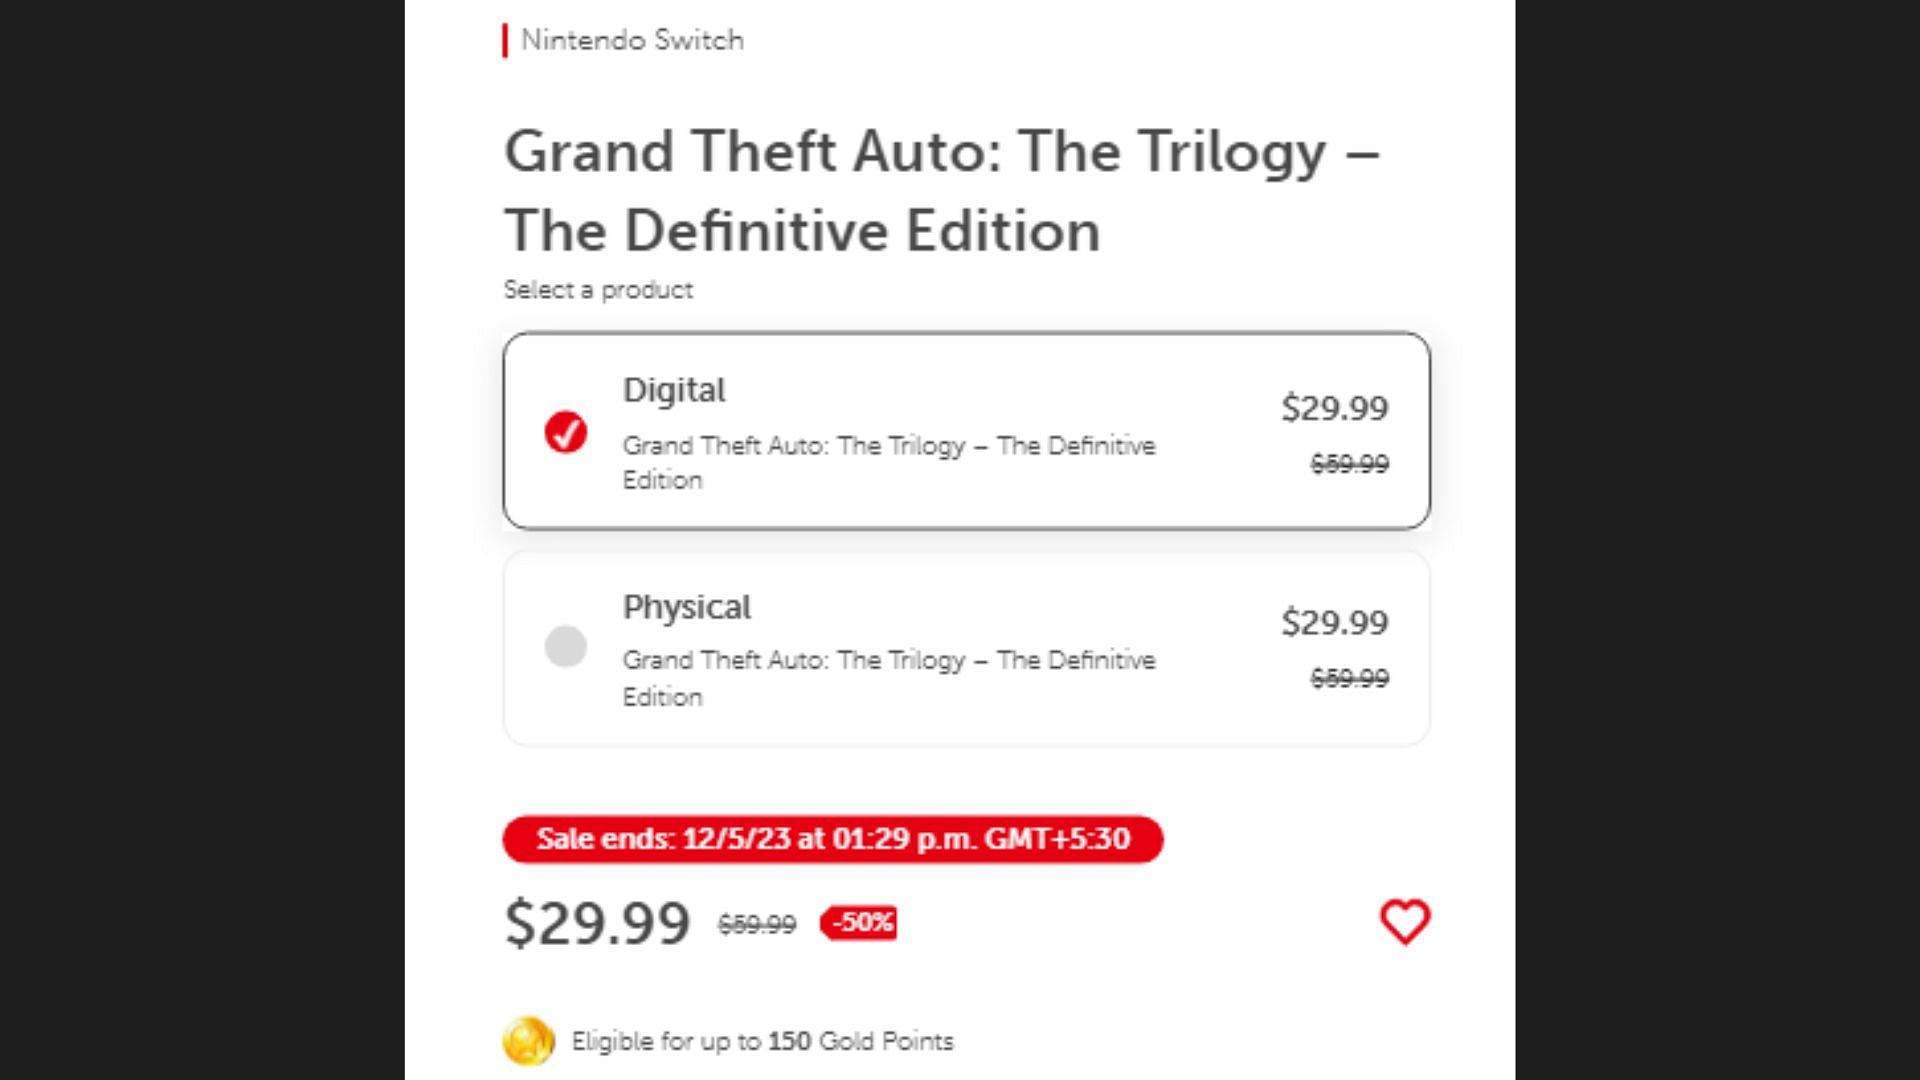 Grand Theft Auto Trilogy&#039;s page on the Nintendo store (Image via nintendo.com)